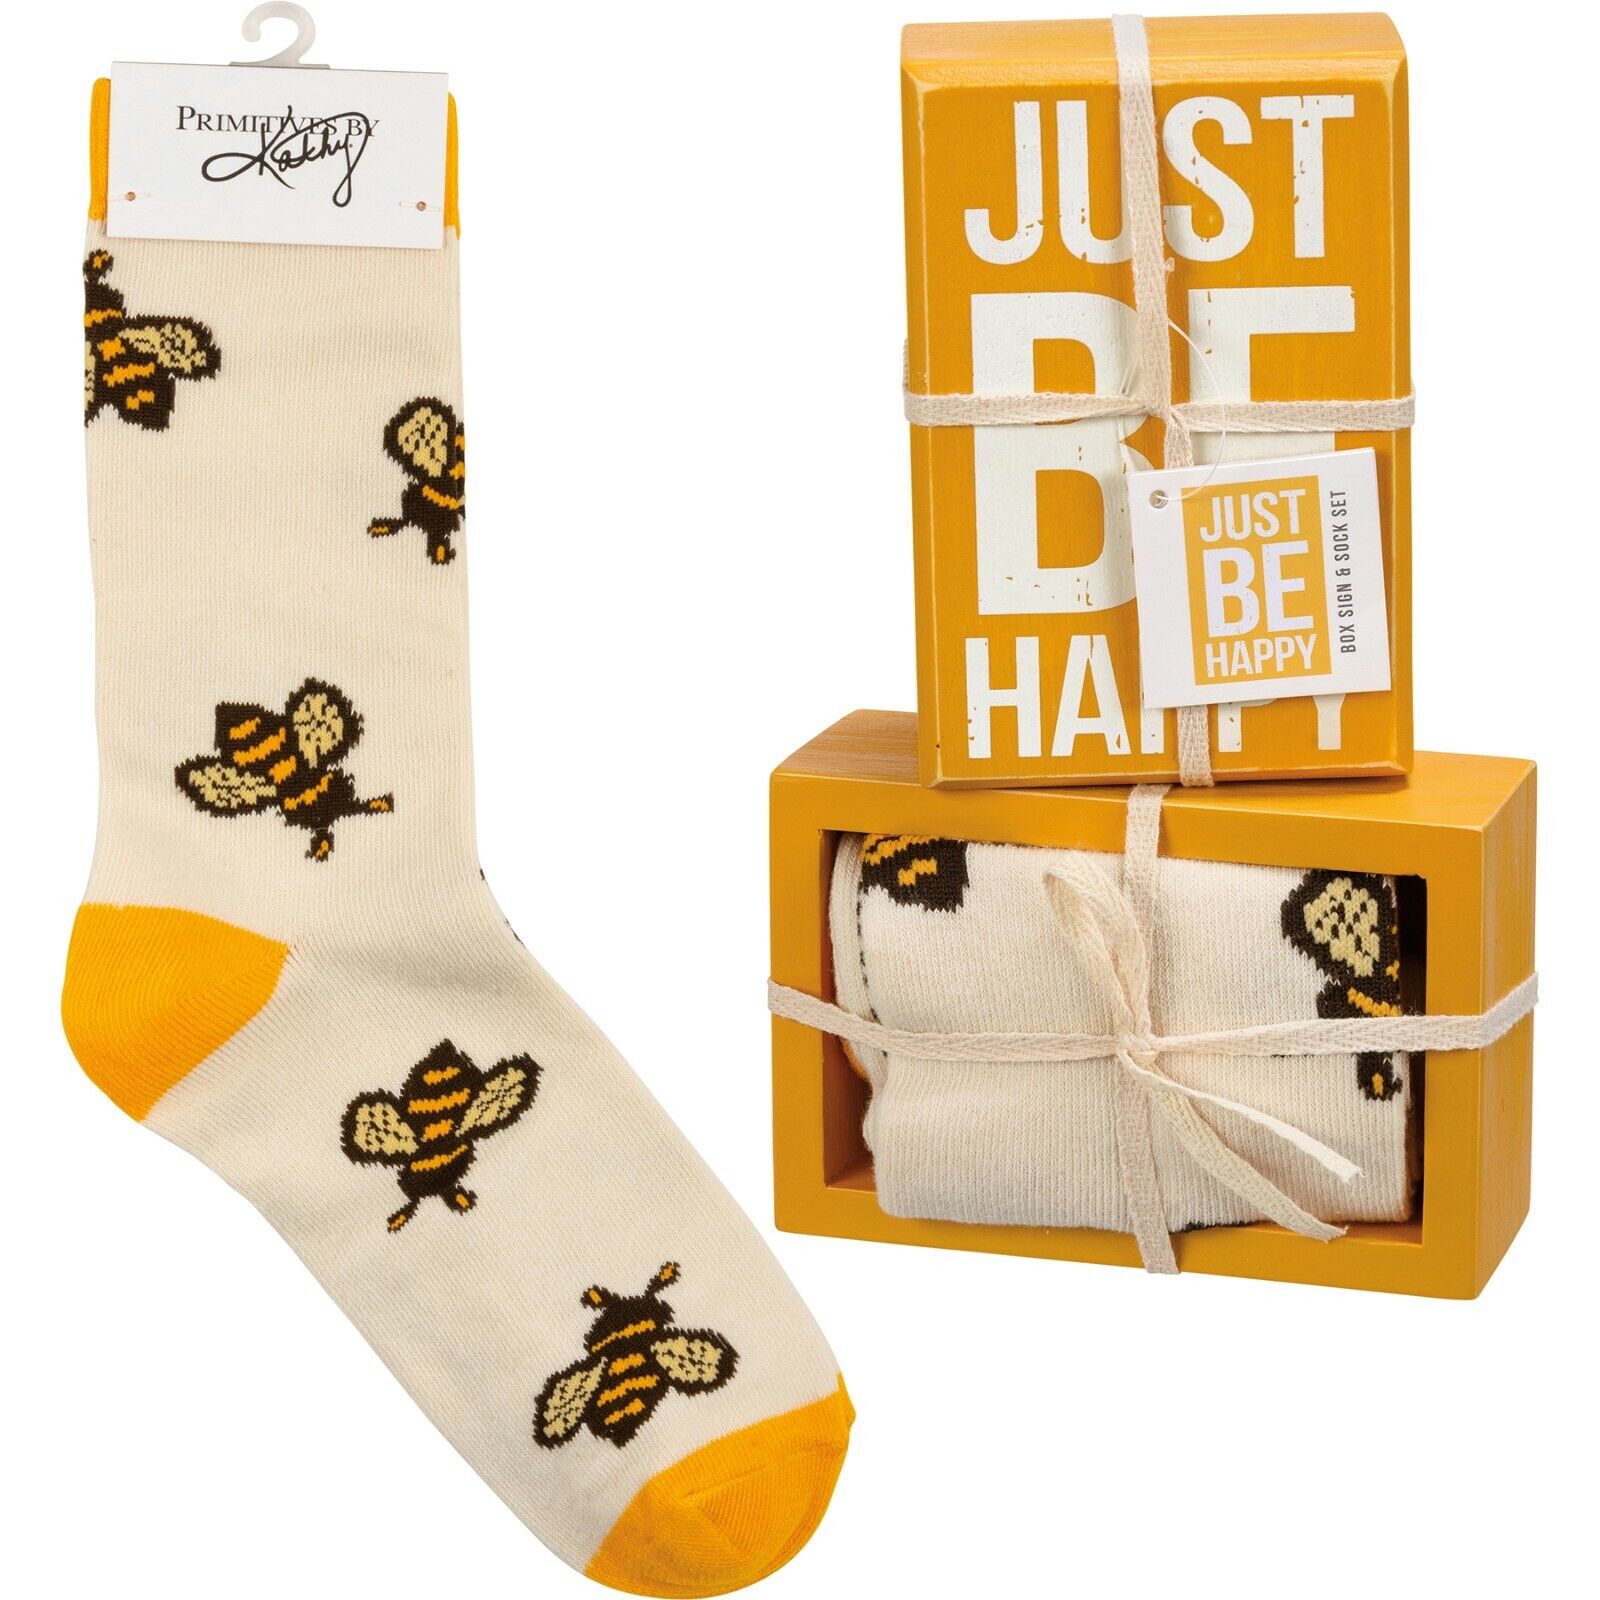 Just Be Happy - Box Sign & Sock Set